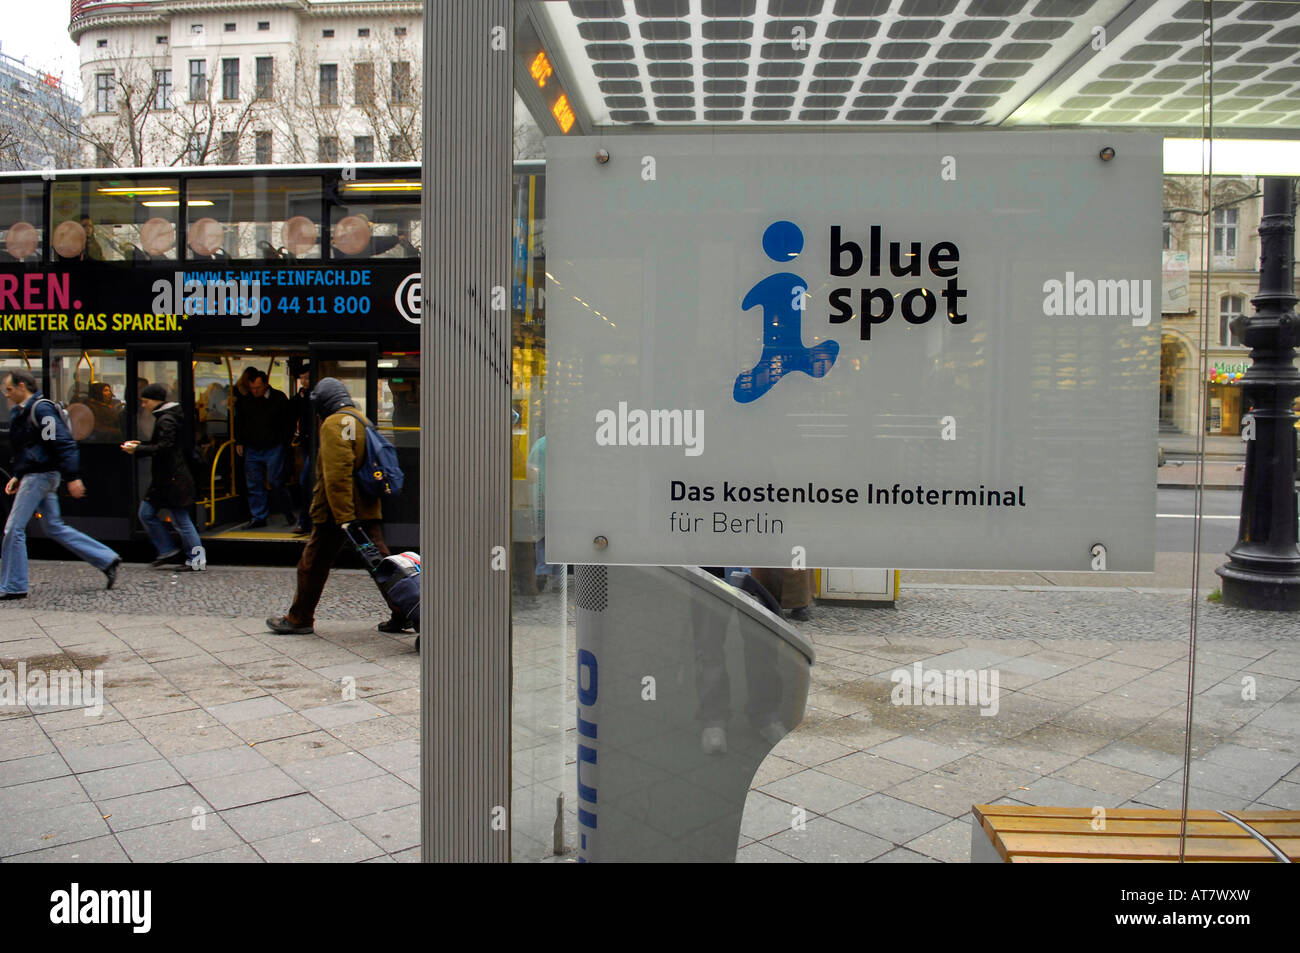 blue spot das kostenlose infoterminal fur berlin city bus stop germany deutschland information travel tourism technology Stock Photo